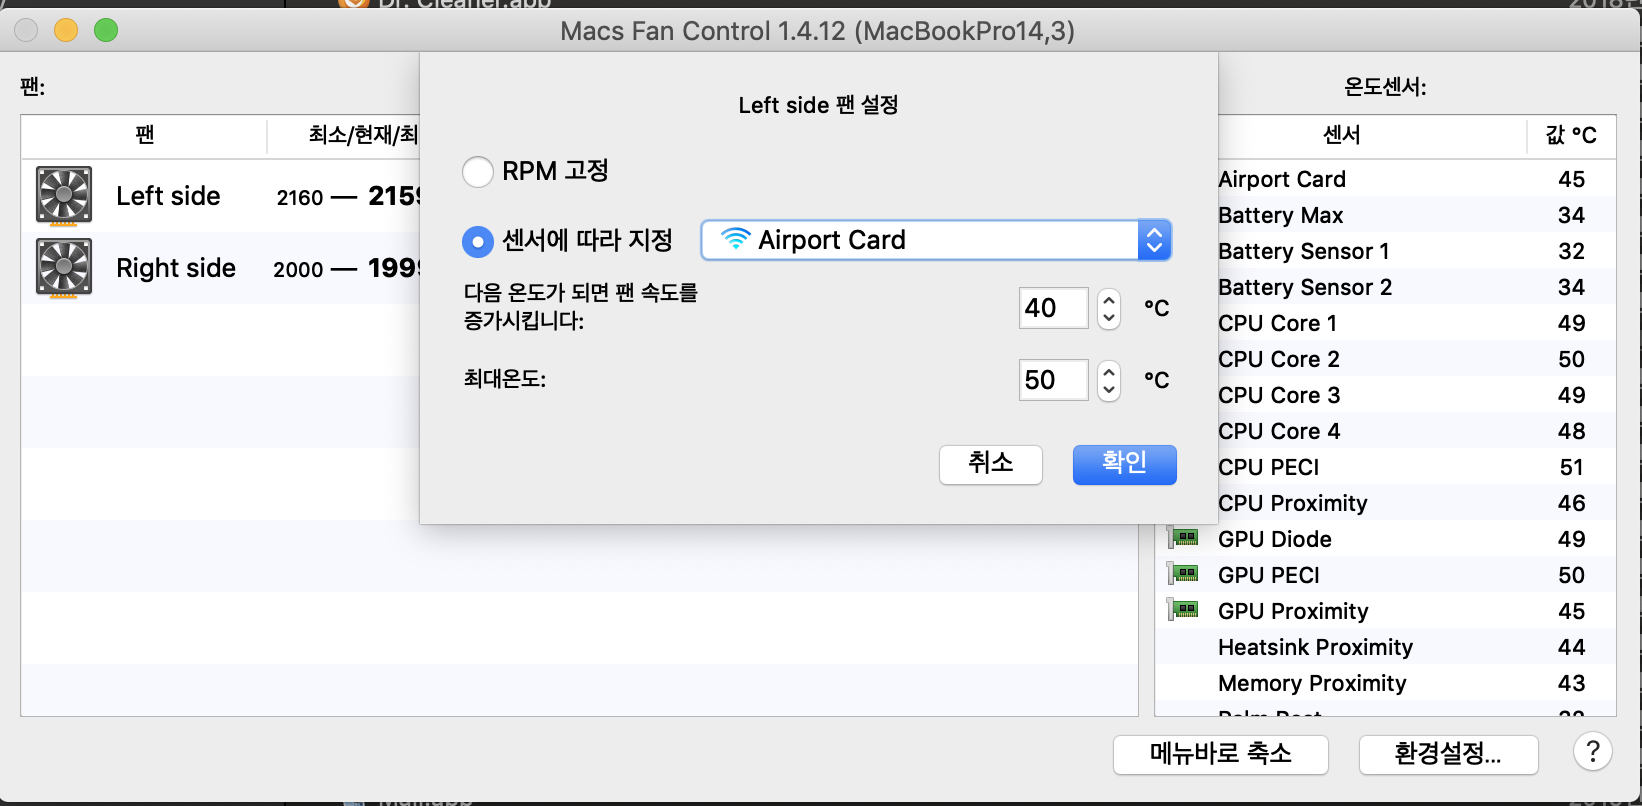 mac fan control pro license key free